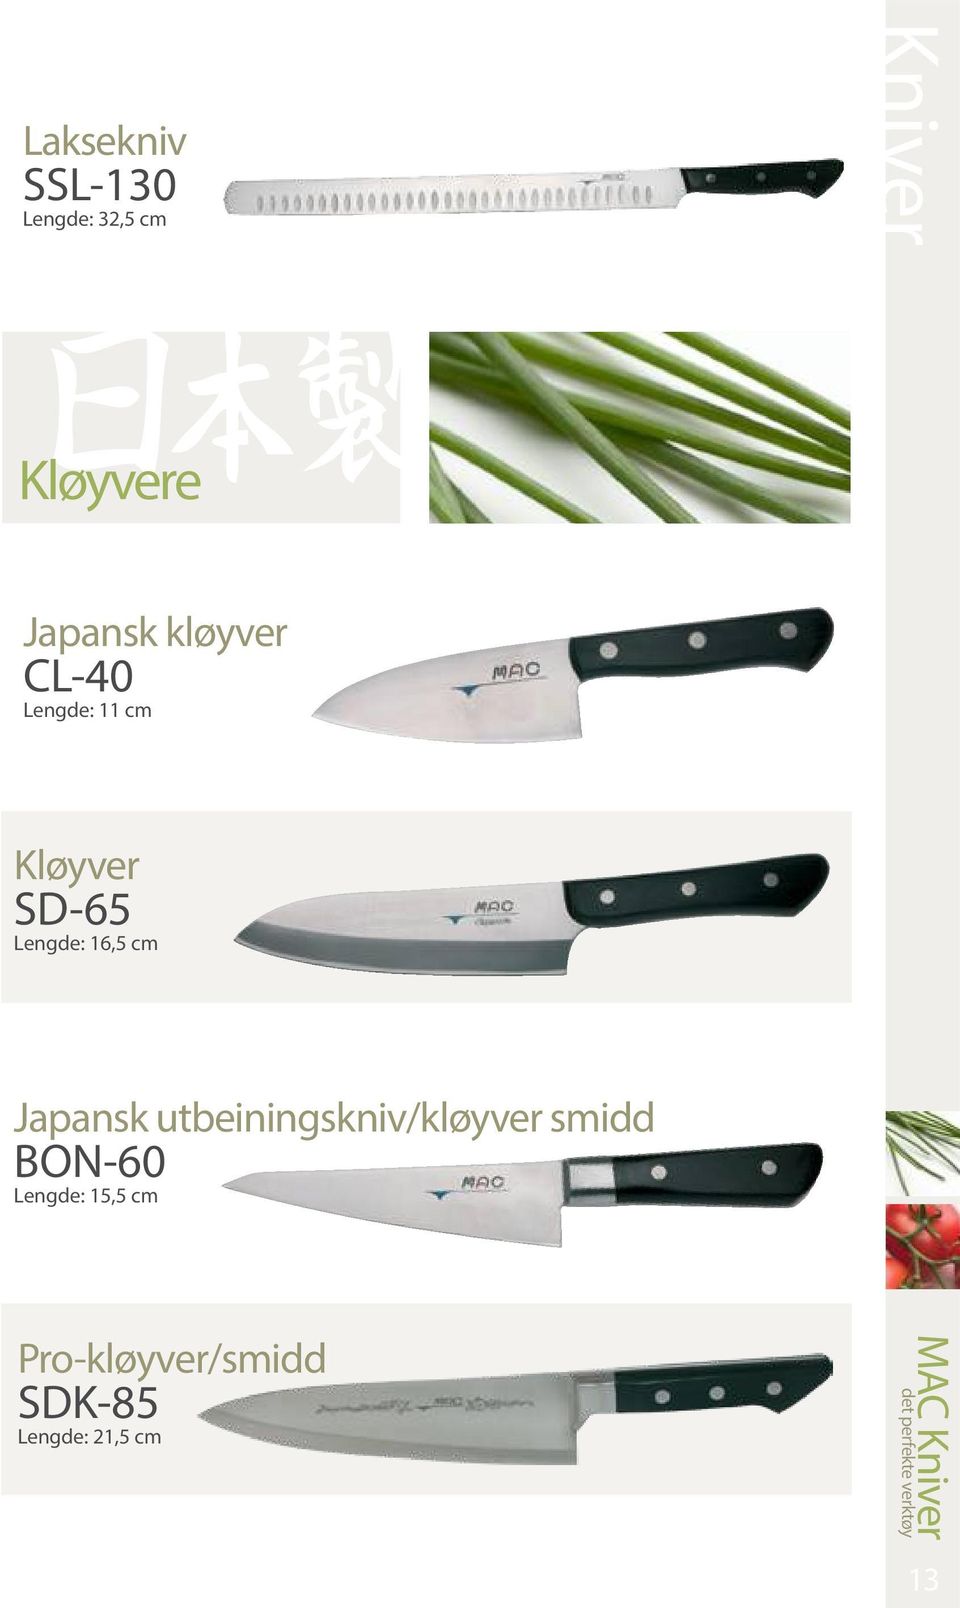 16,5 cm Japansk utbeiningskniv/kløyver smidd BON-60